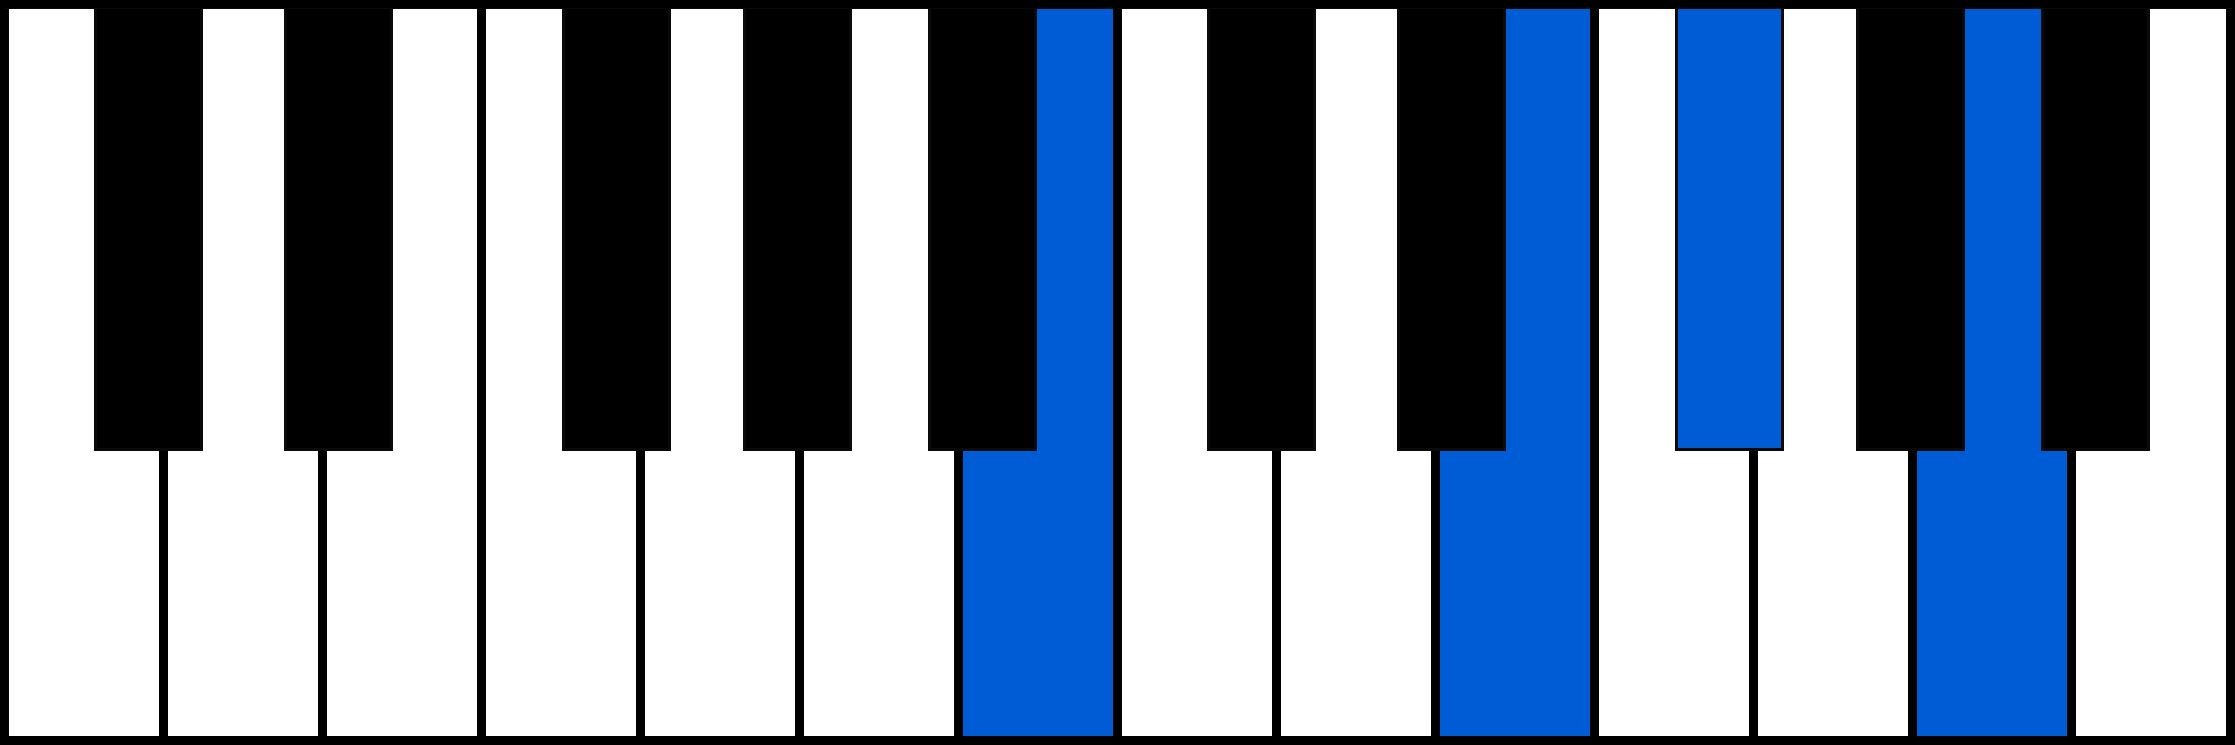 B7sus4 piano chord fingering